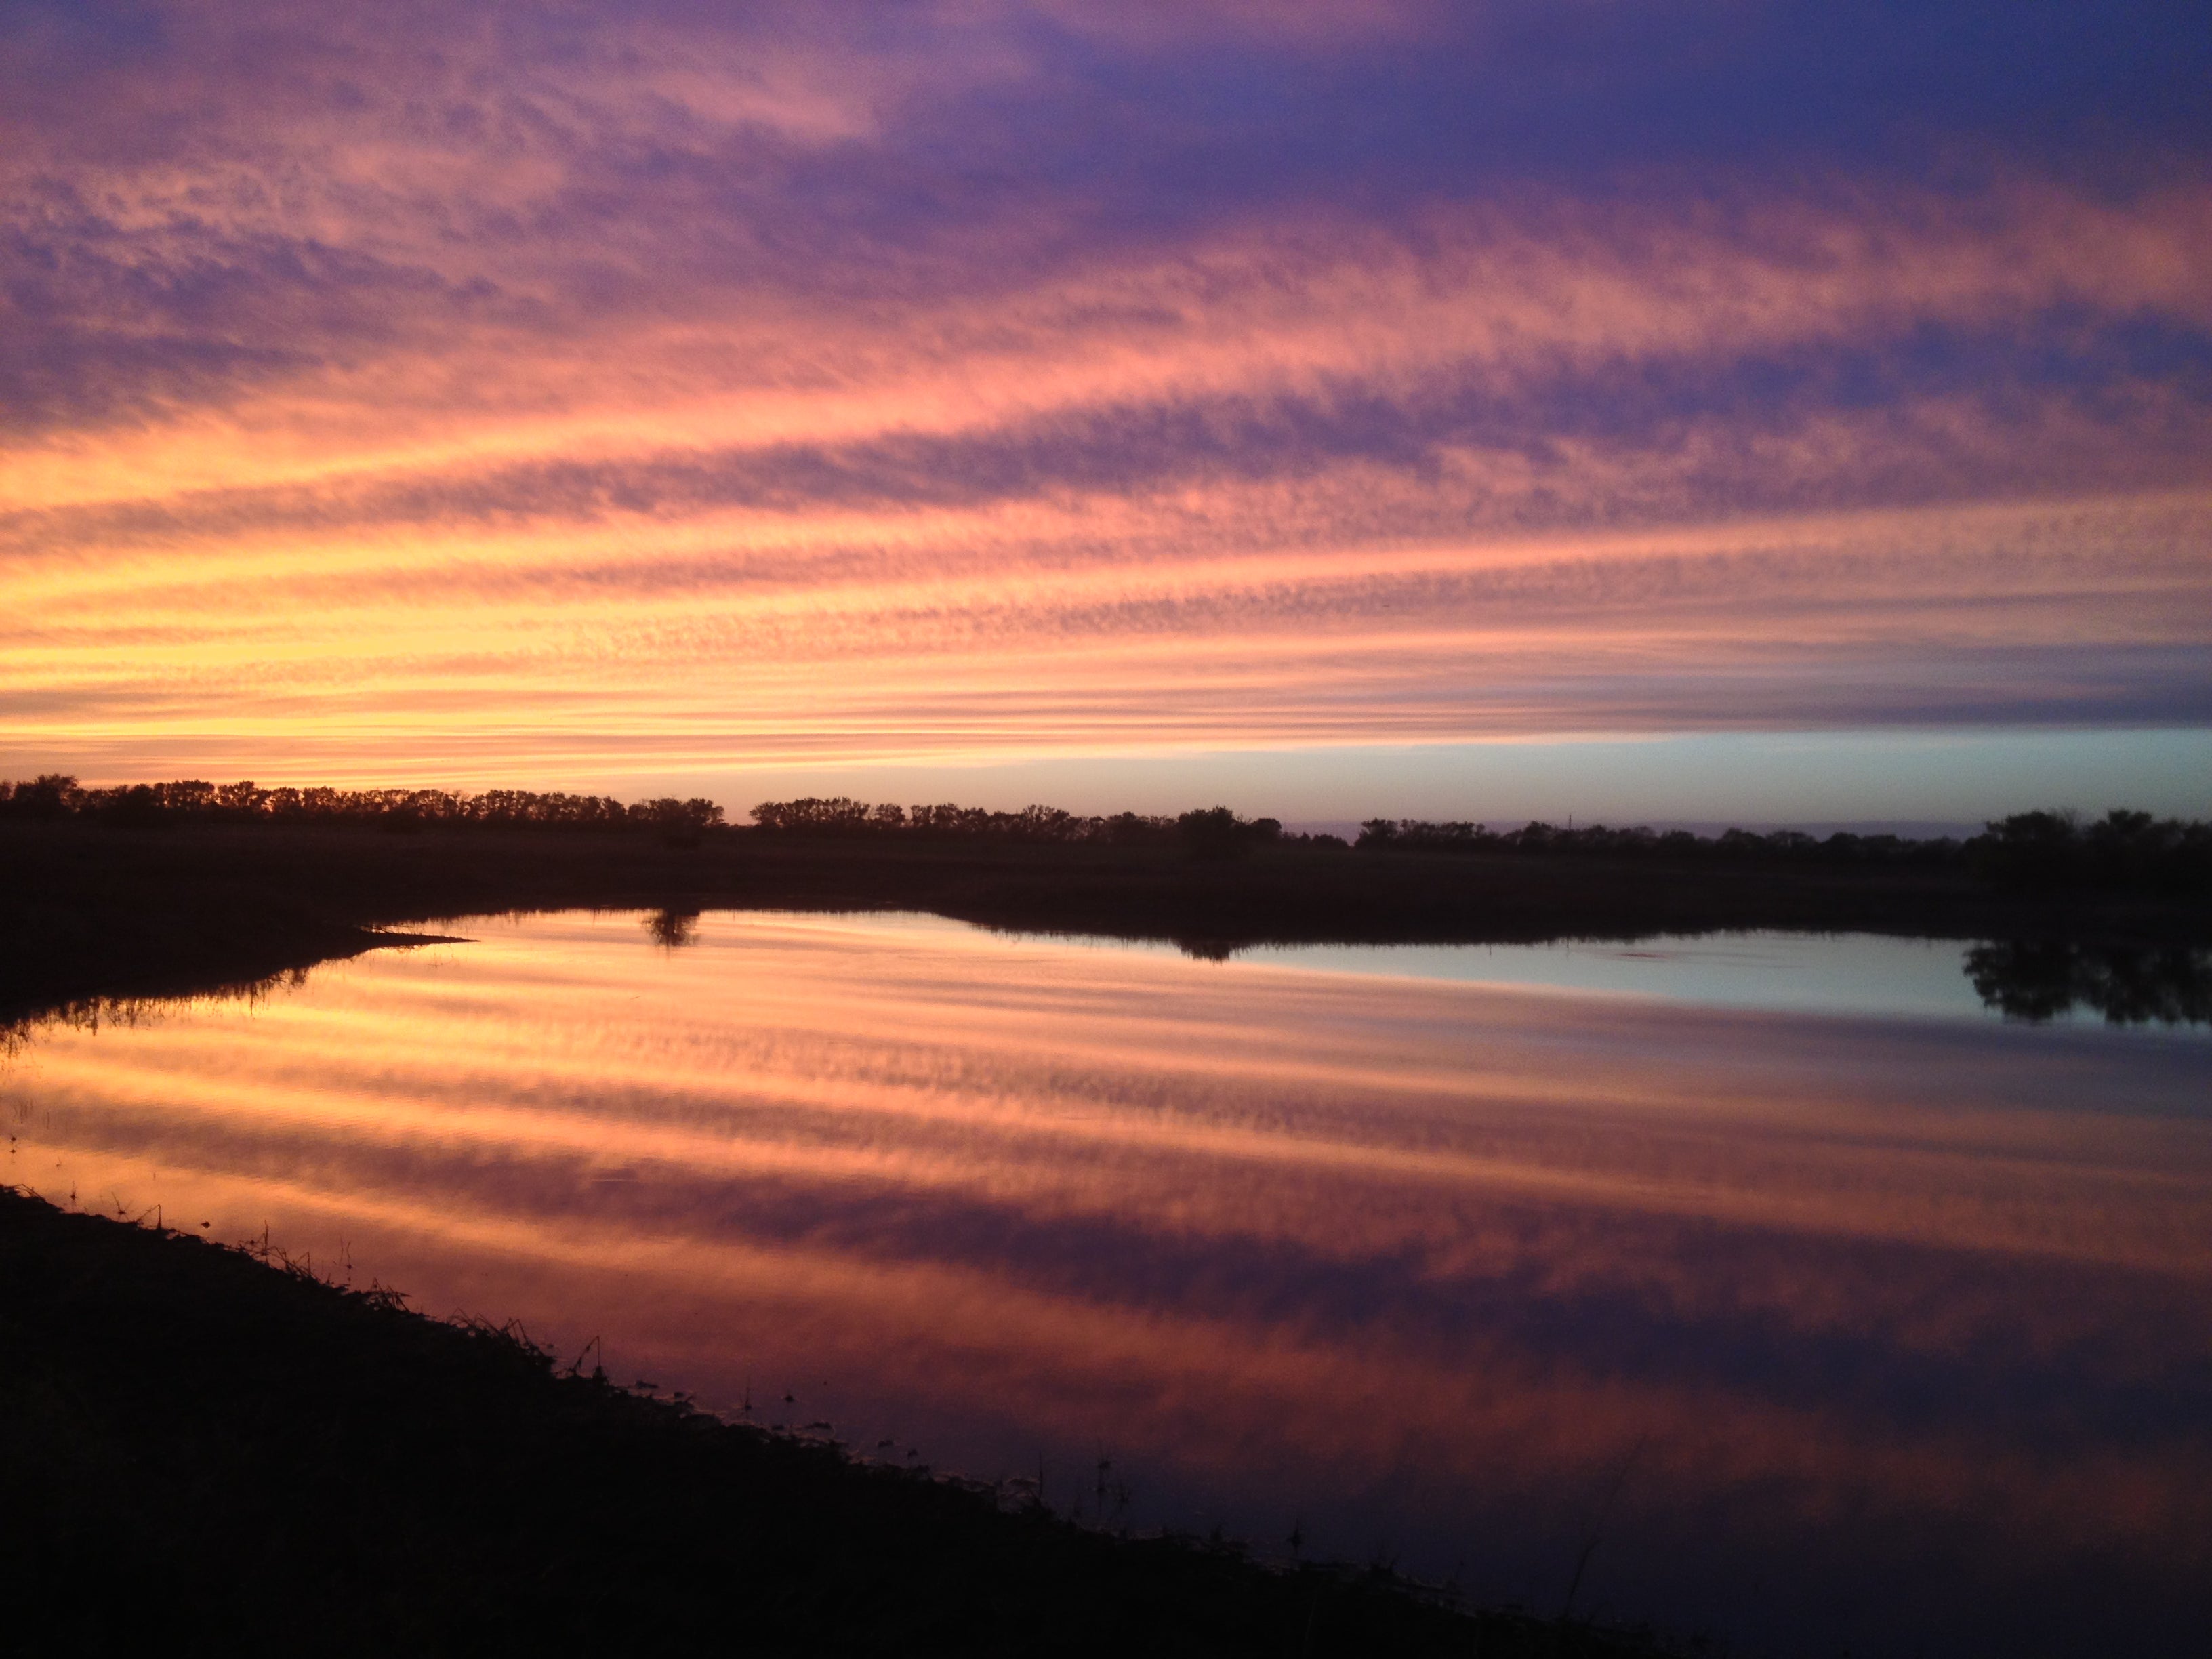 Beautiful sunset reflection on a farm pond